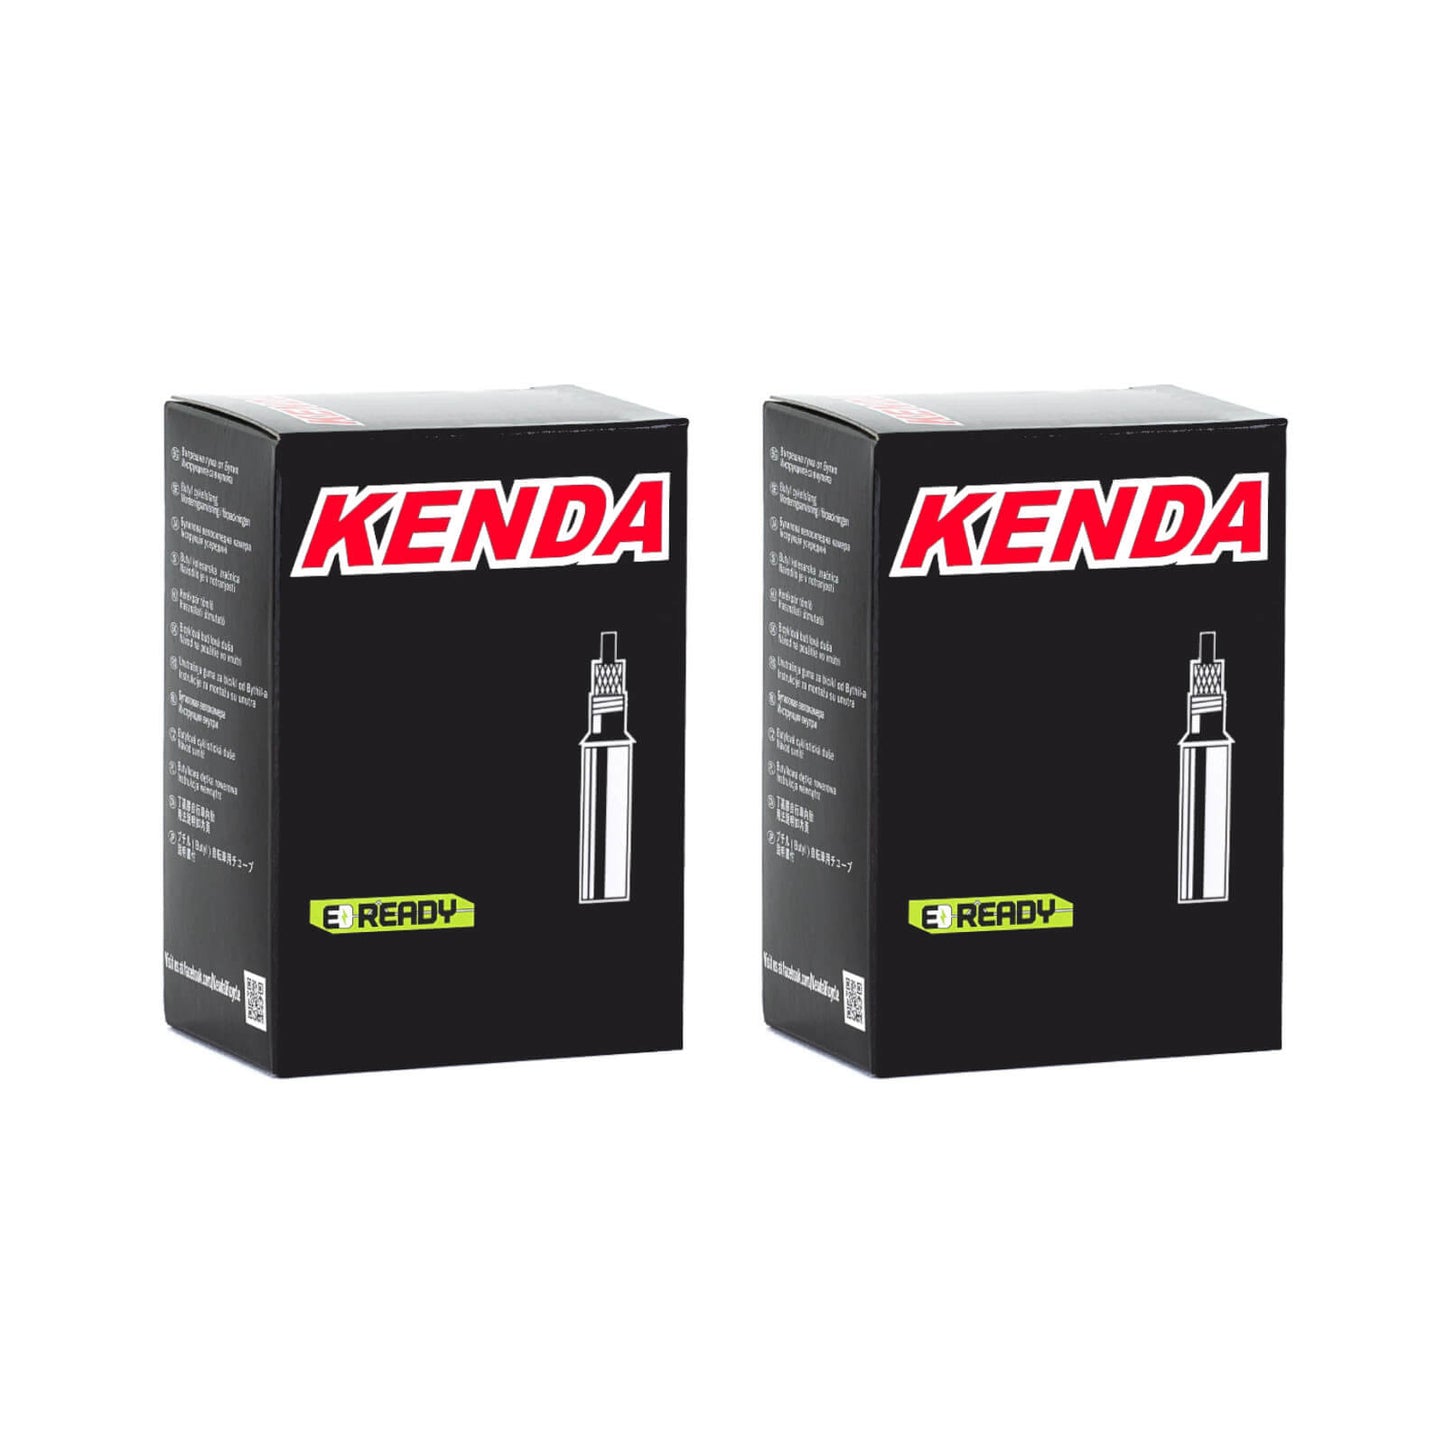 Kenda 26x2.4-2.8" 26 Inch Presta Valve Bike Inner Tube Pack of 2